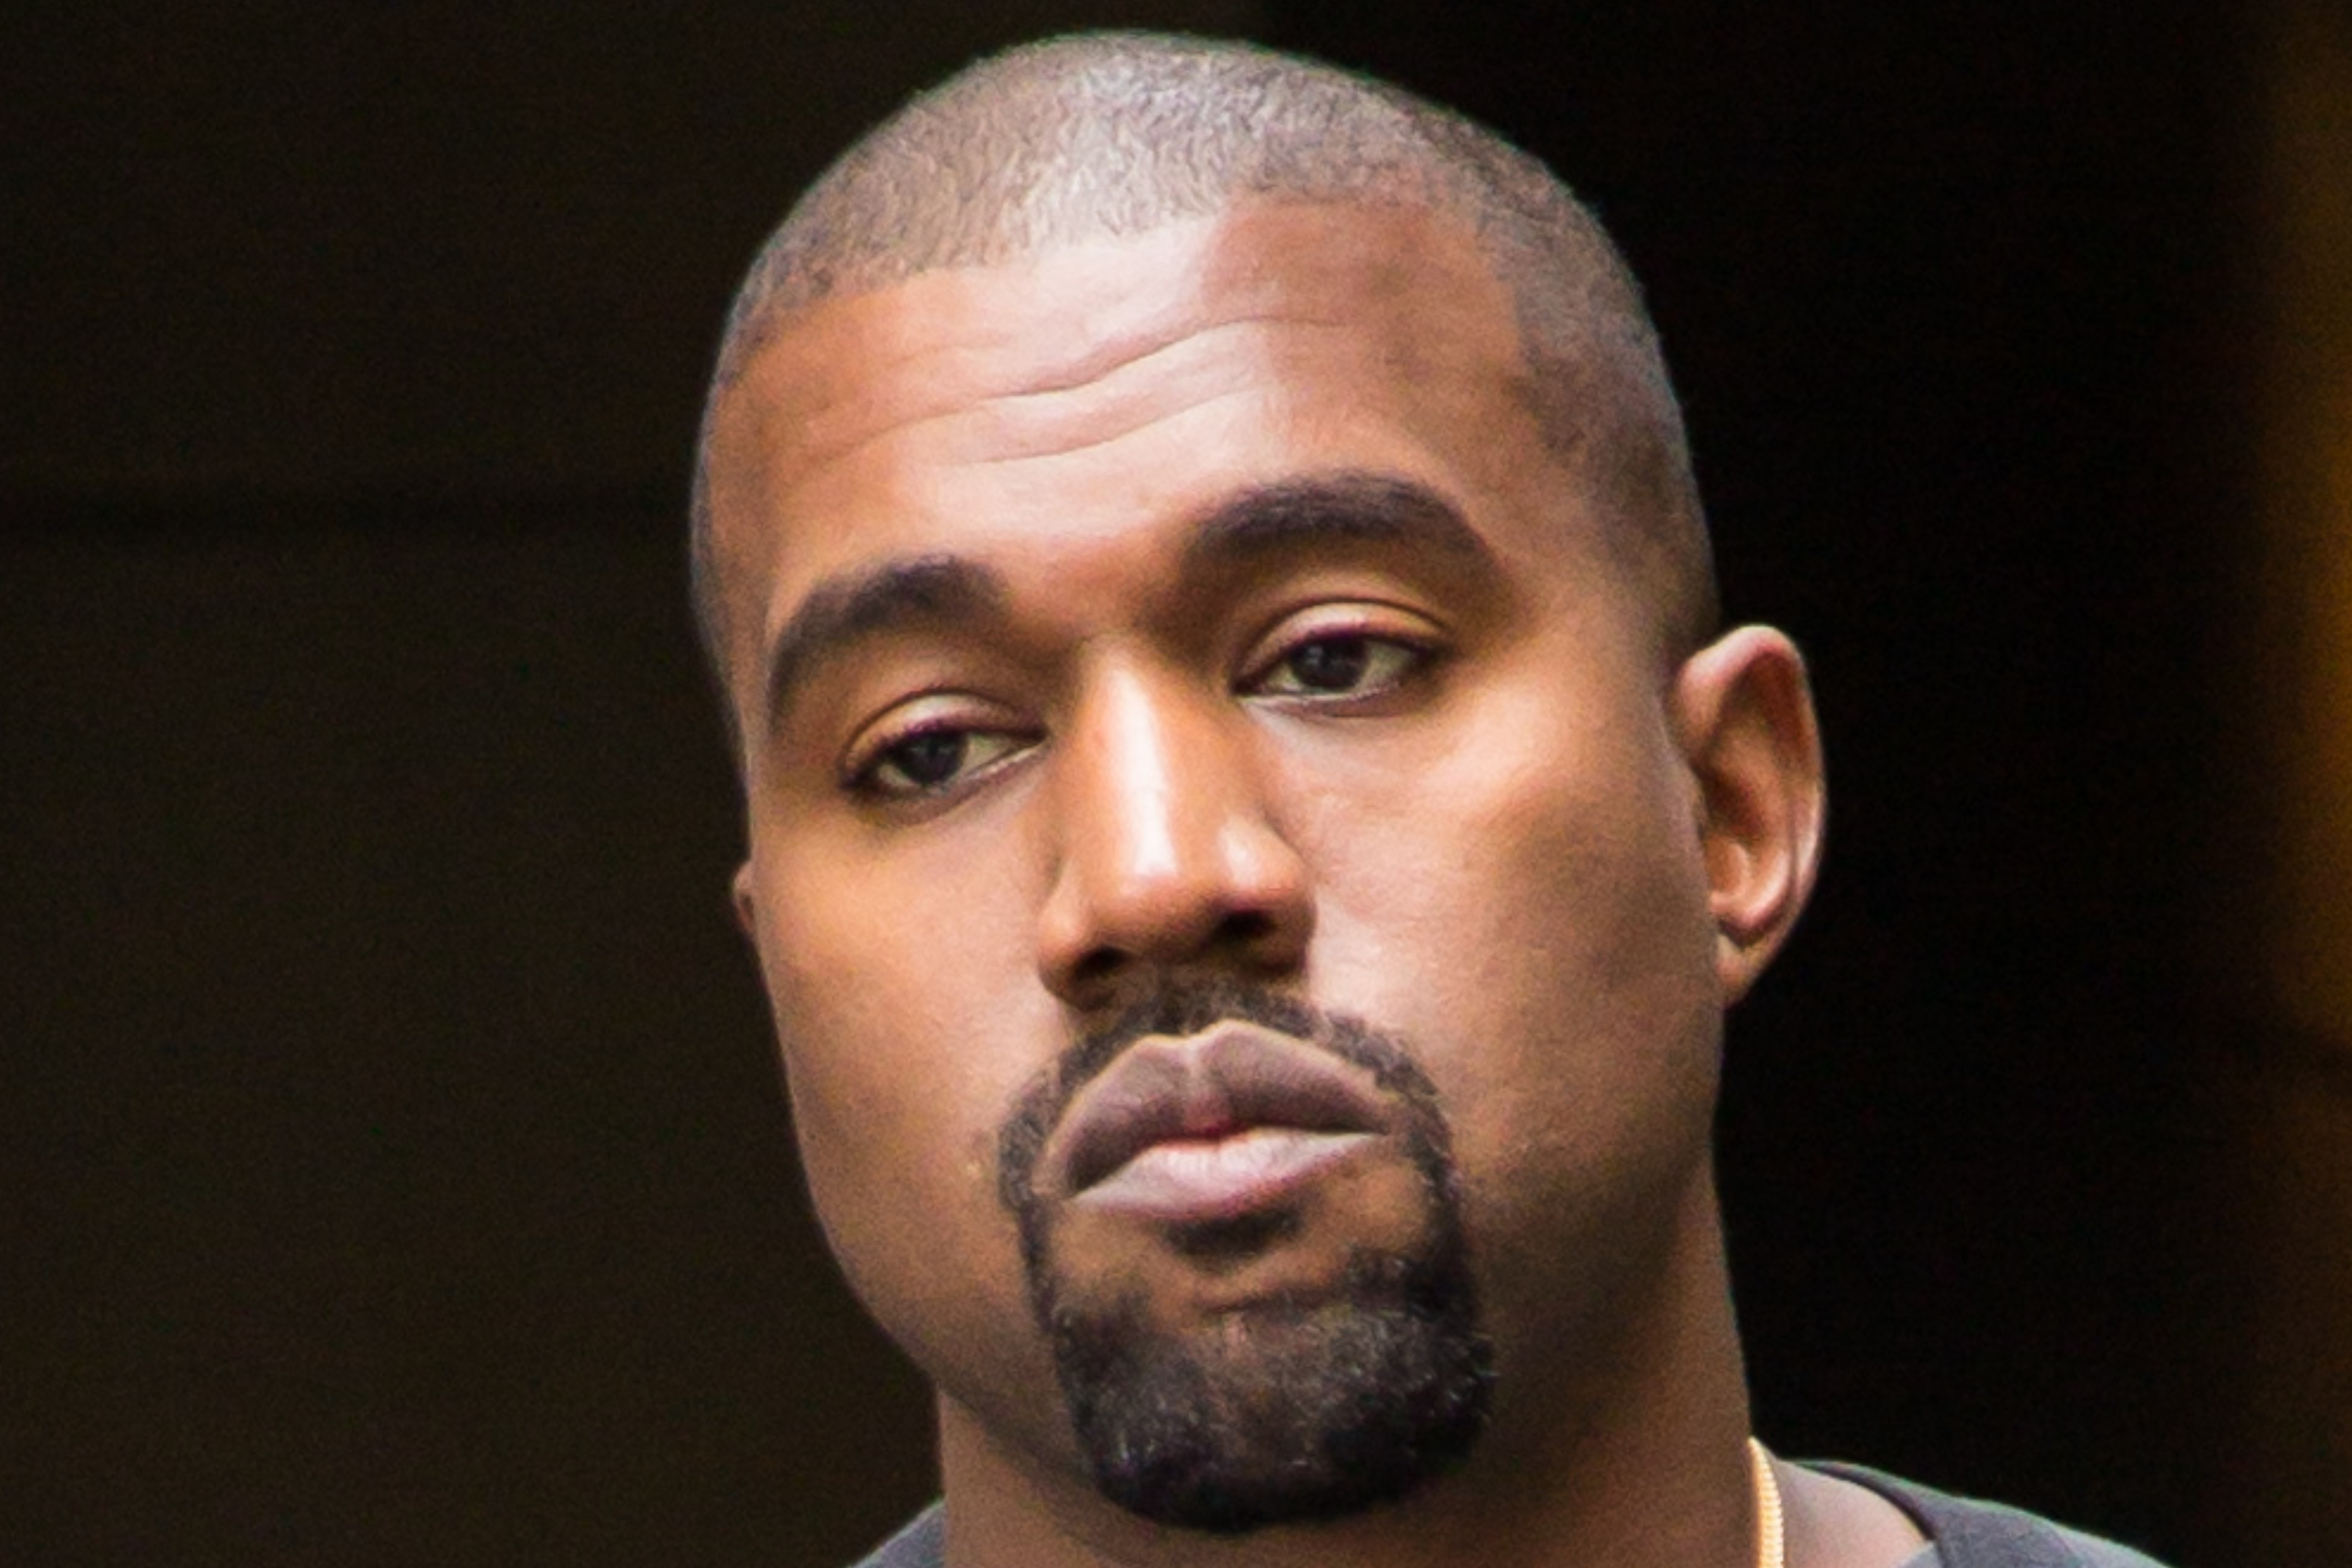 Celebrity rapper Kanye West faces $2 million lawsuit from clothing giant Gap